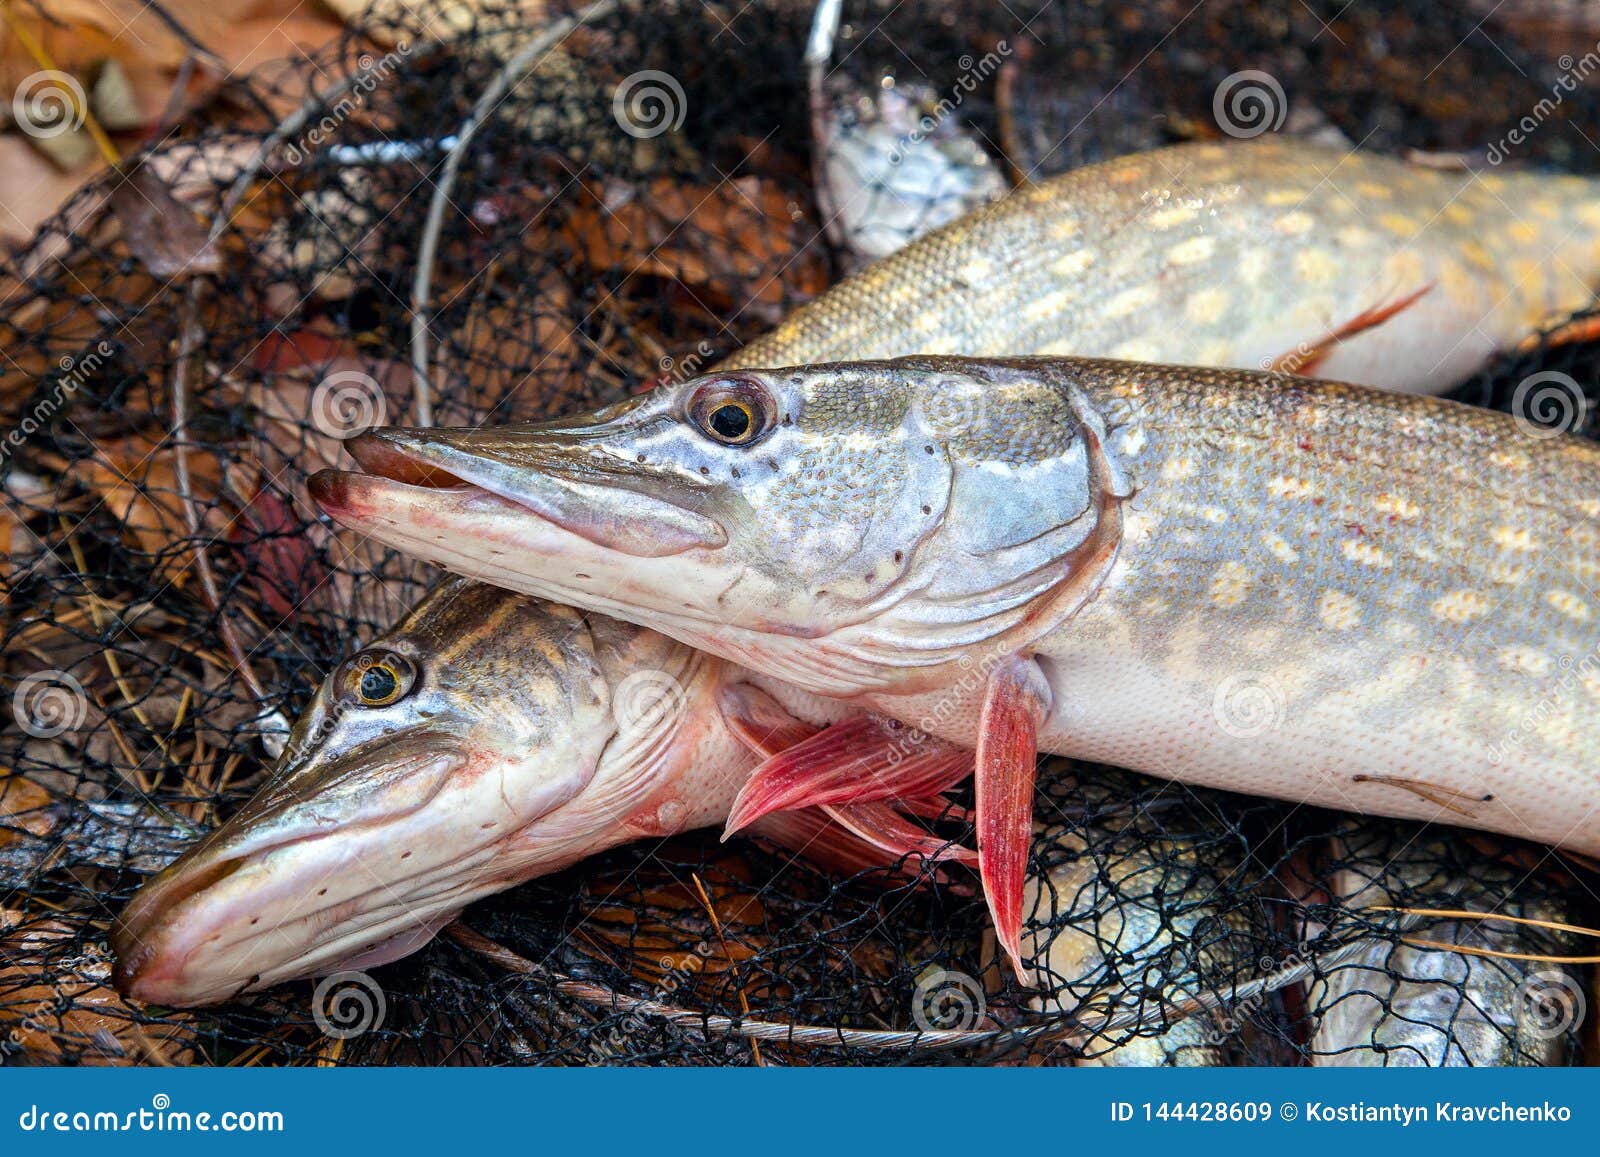 Freshwater Pike Fish. Two Freshwater Pike Fish Lies on Landing Net